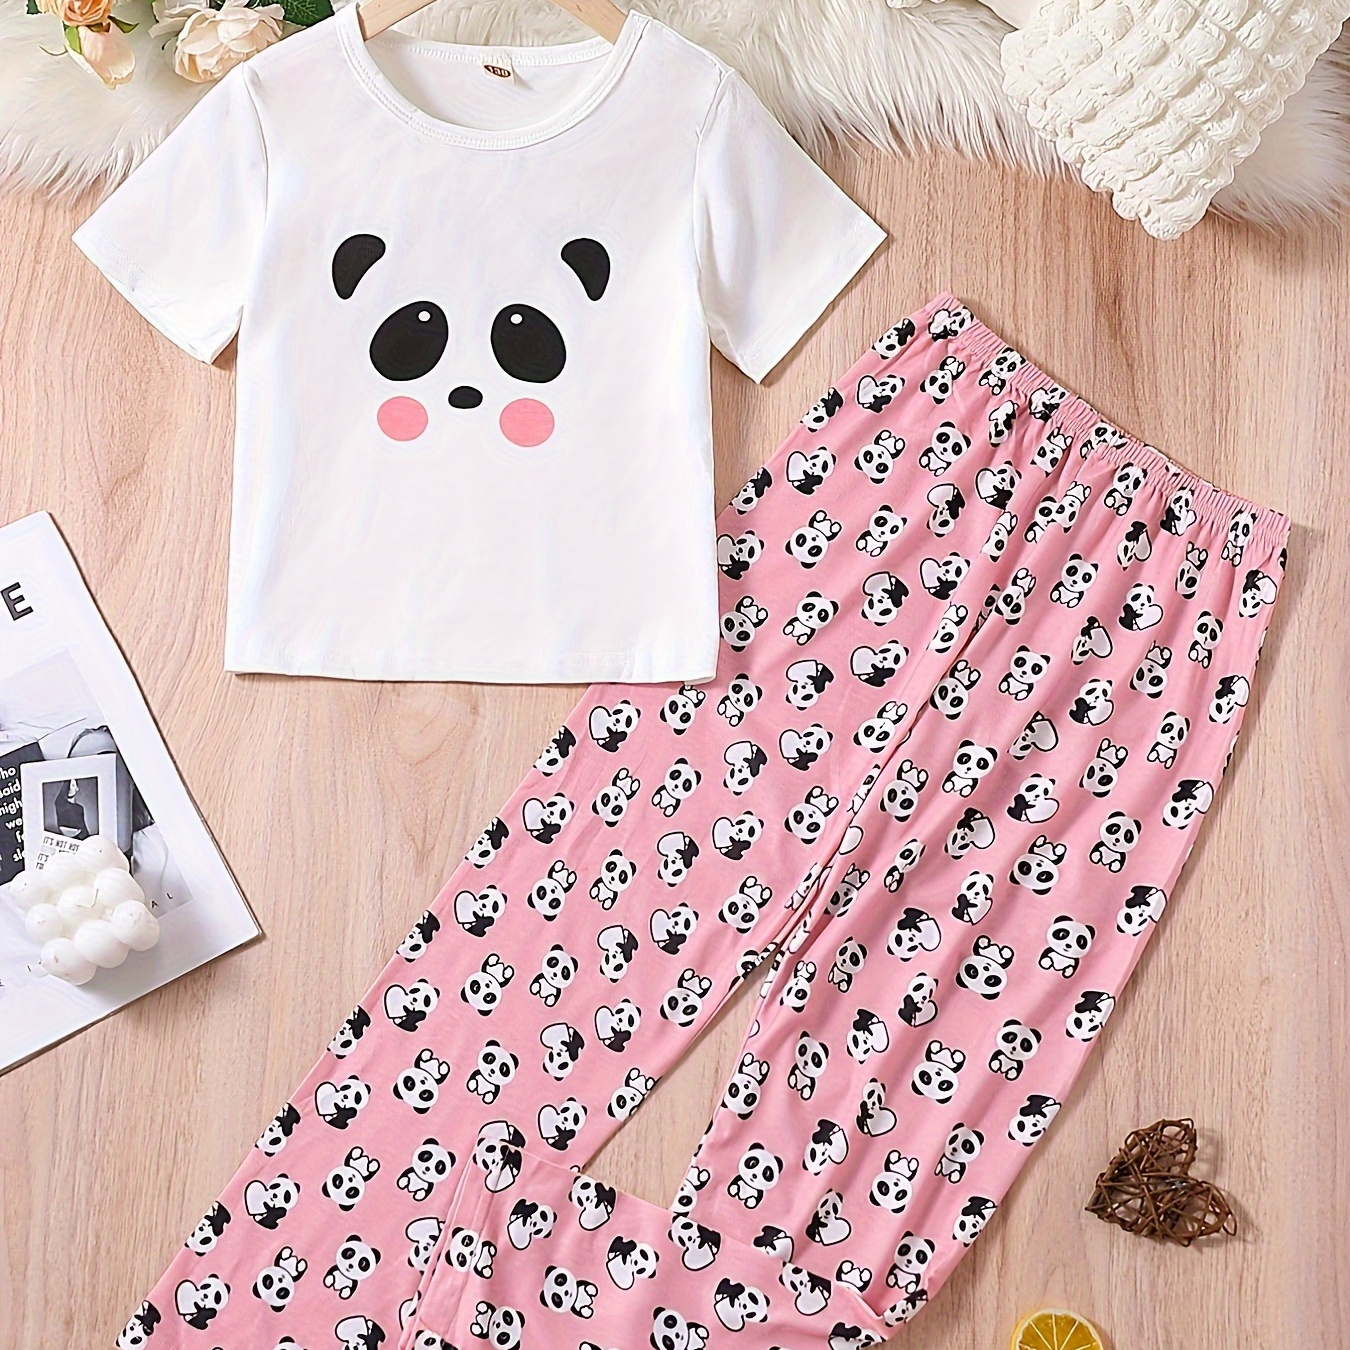 

Girls 2-piece Trendy Pajama Sets Cartoon Panda Pattern Round Neck Short Sleeve Top & Matching Pants Casual Pj Sets